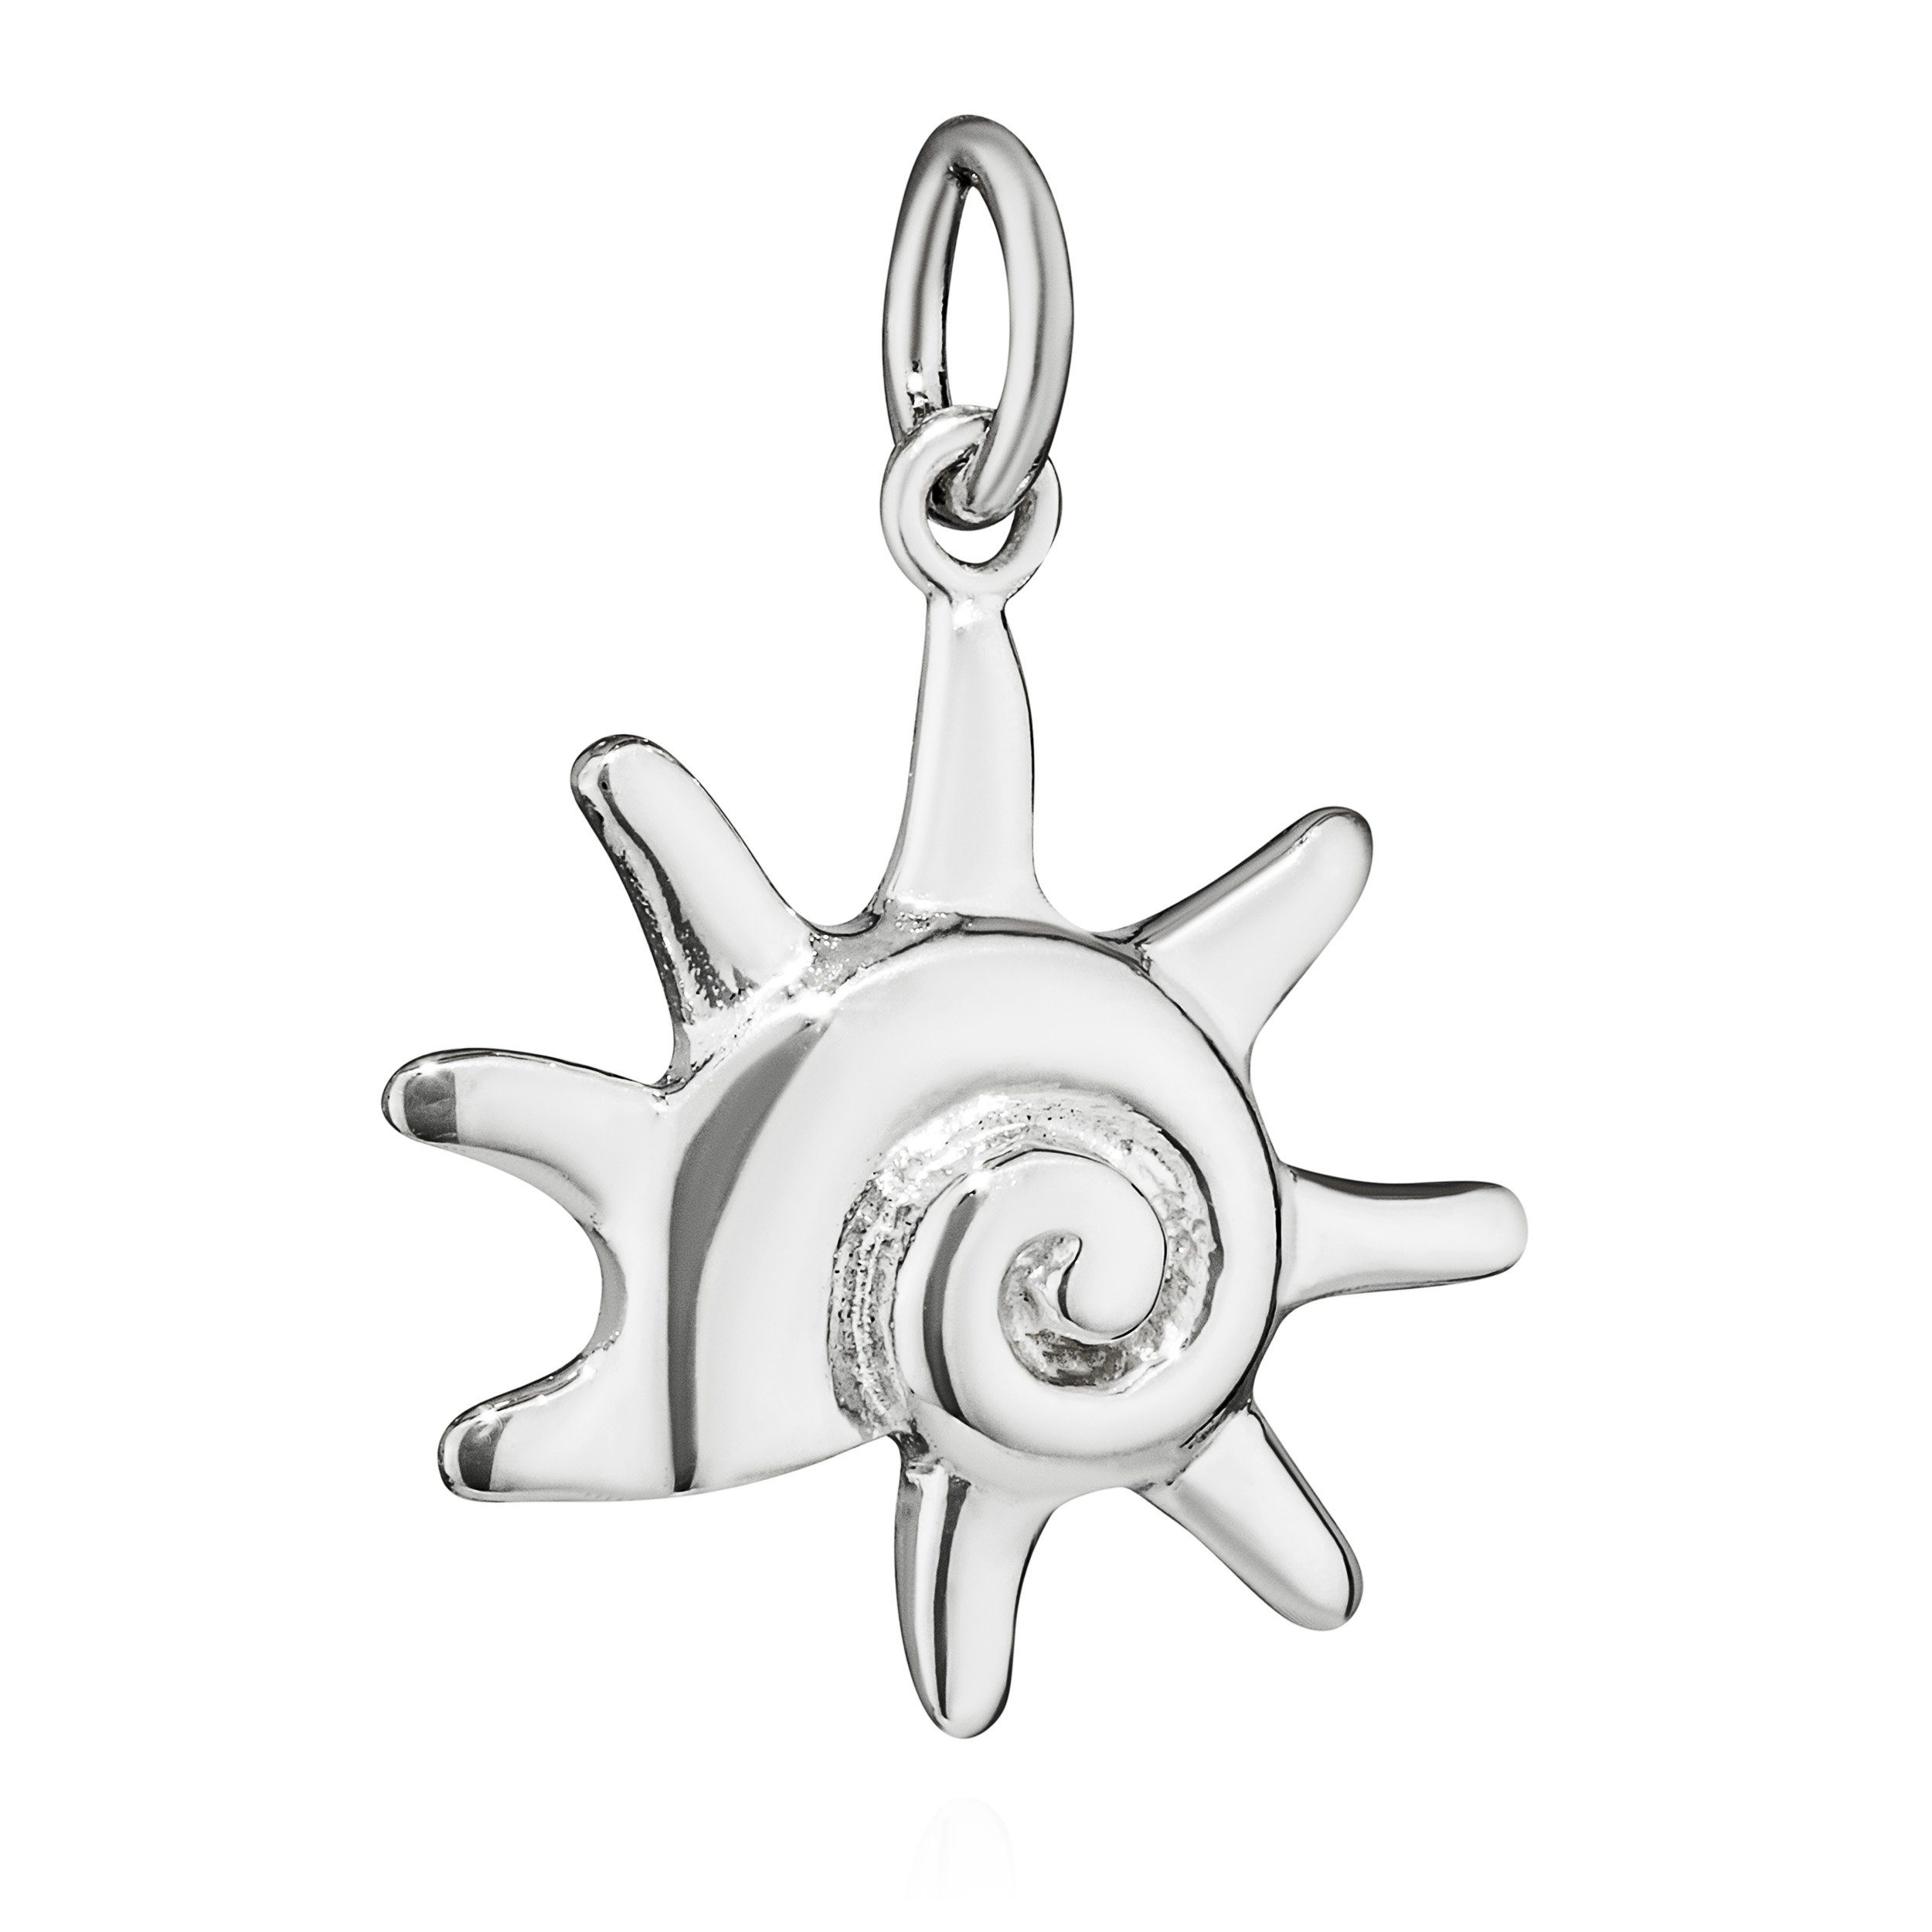 groß Kettenanhänger NKlaus Sonnenspirale Kettenanhänger 2x2cm Silber Kettencharm-Anhänge 925